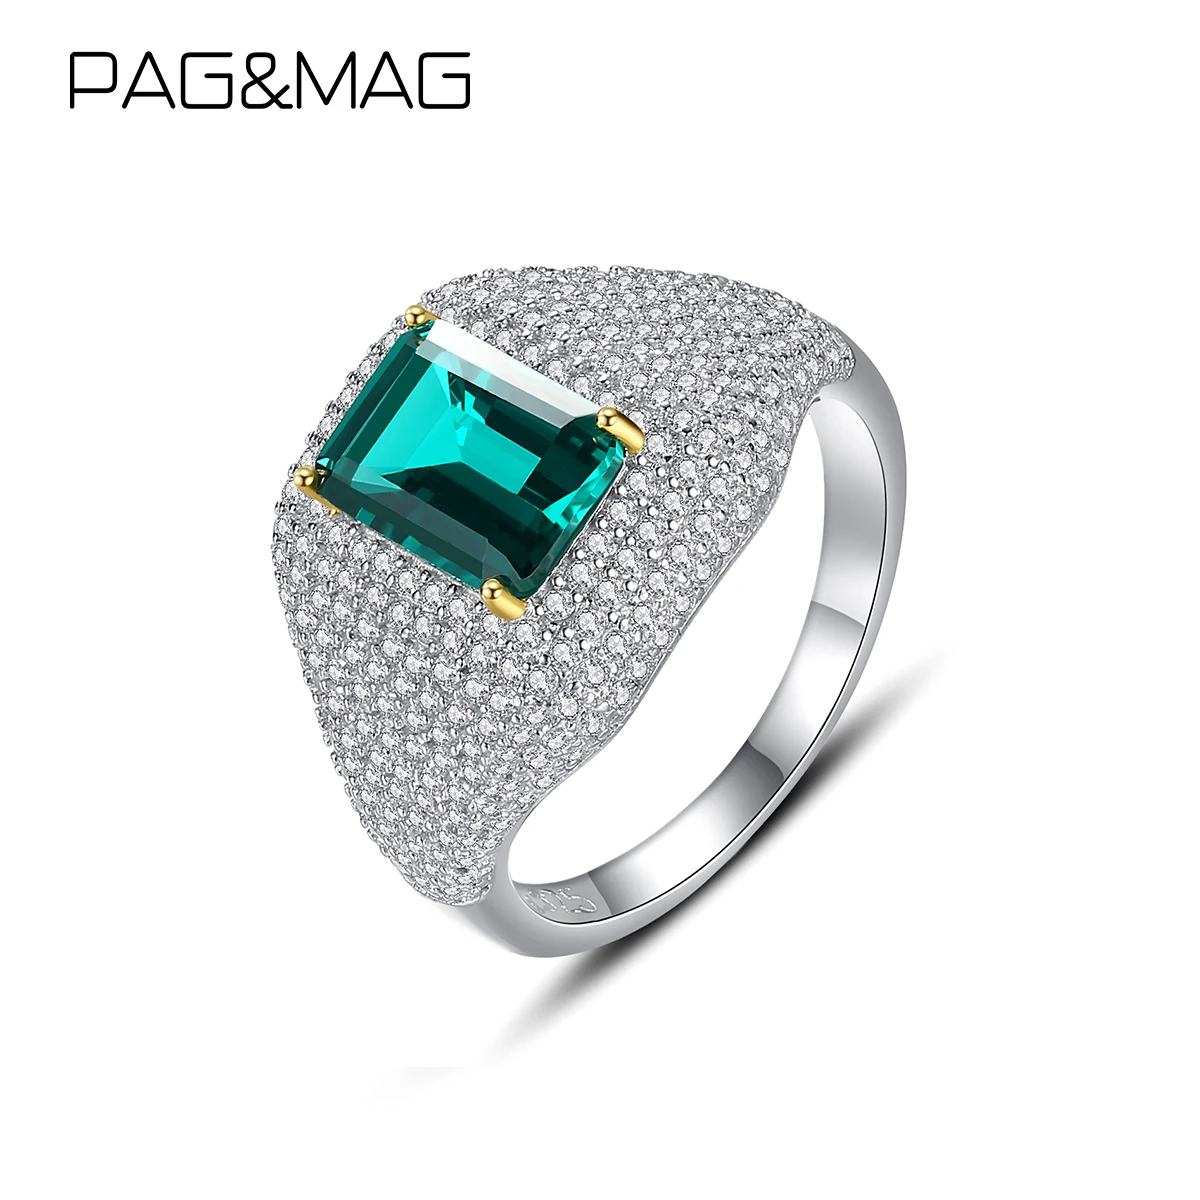 PAG & MAG-خاتم زواج من الفضة الإسترليني والزمرد للنساء ، خاتم ، 925 فضة استرلينية ، أحجار كريمة فاخرة ، مجوهرات راقية ، 925